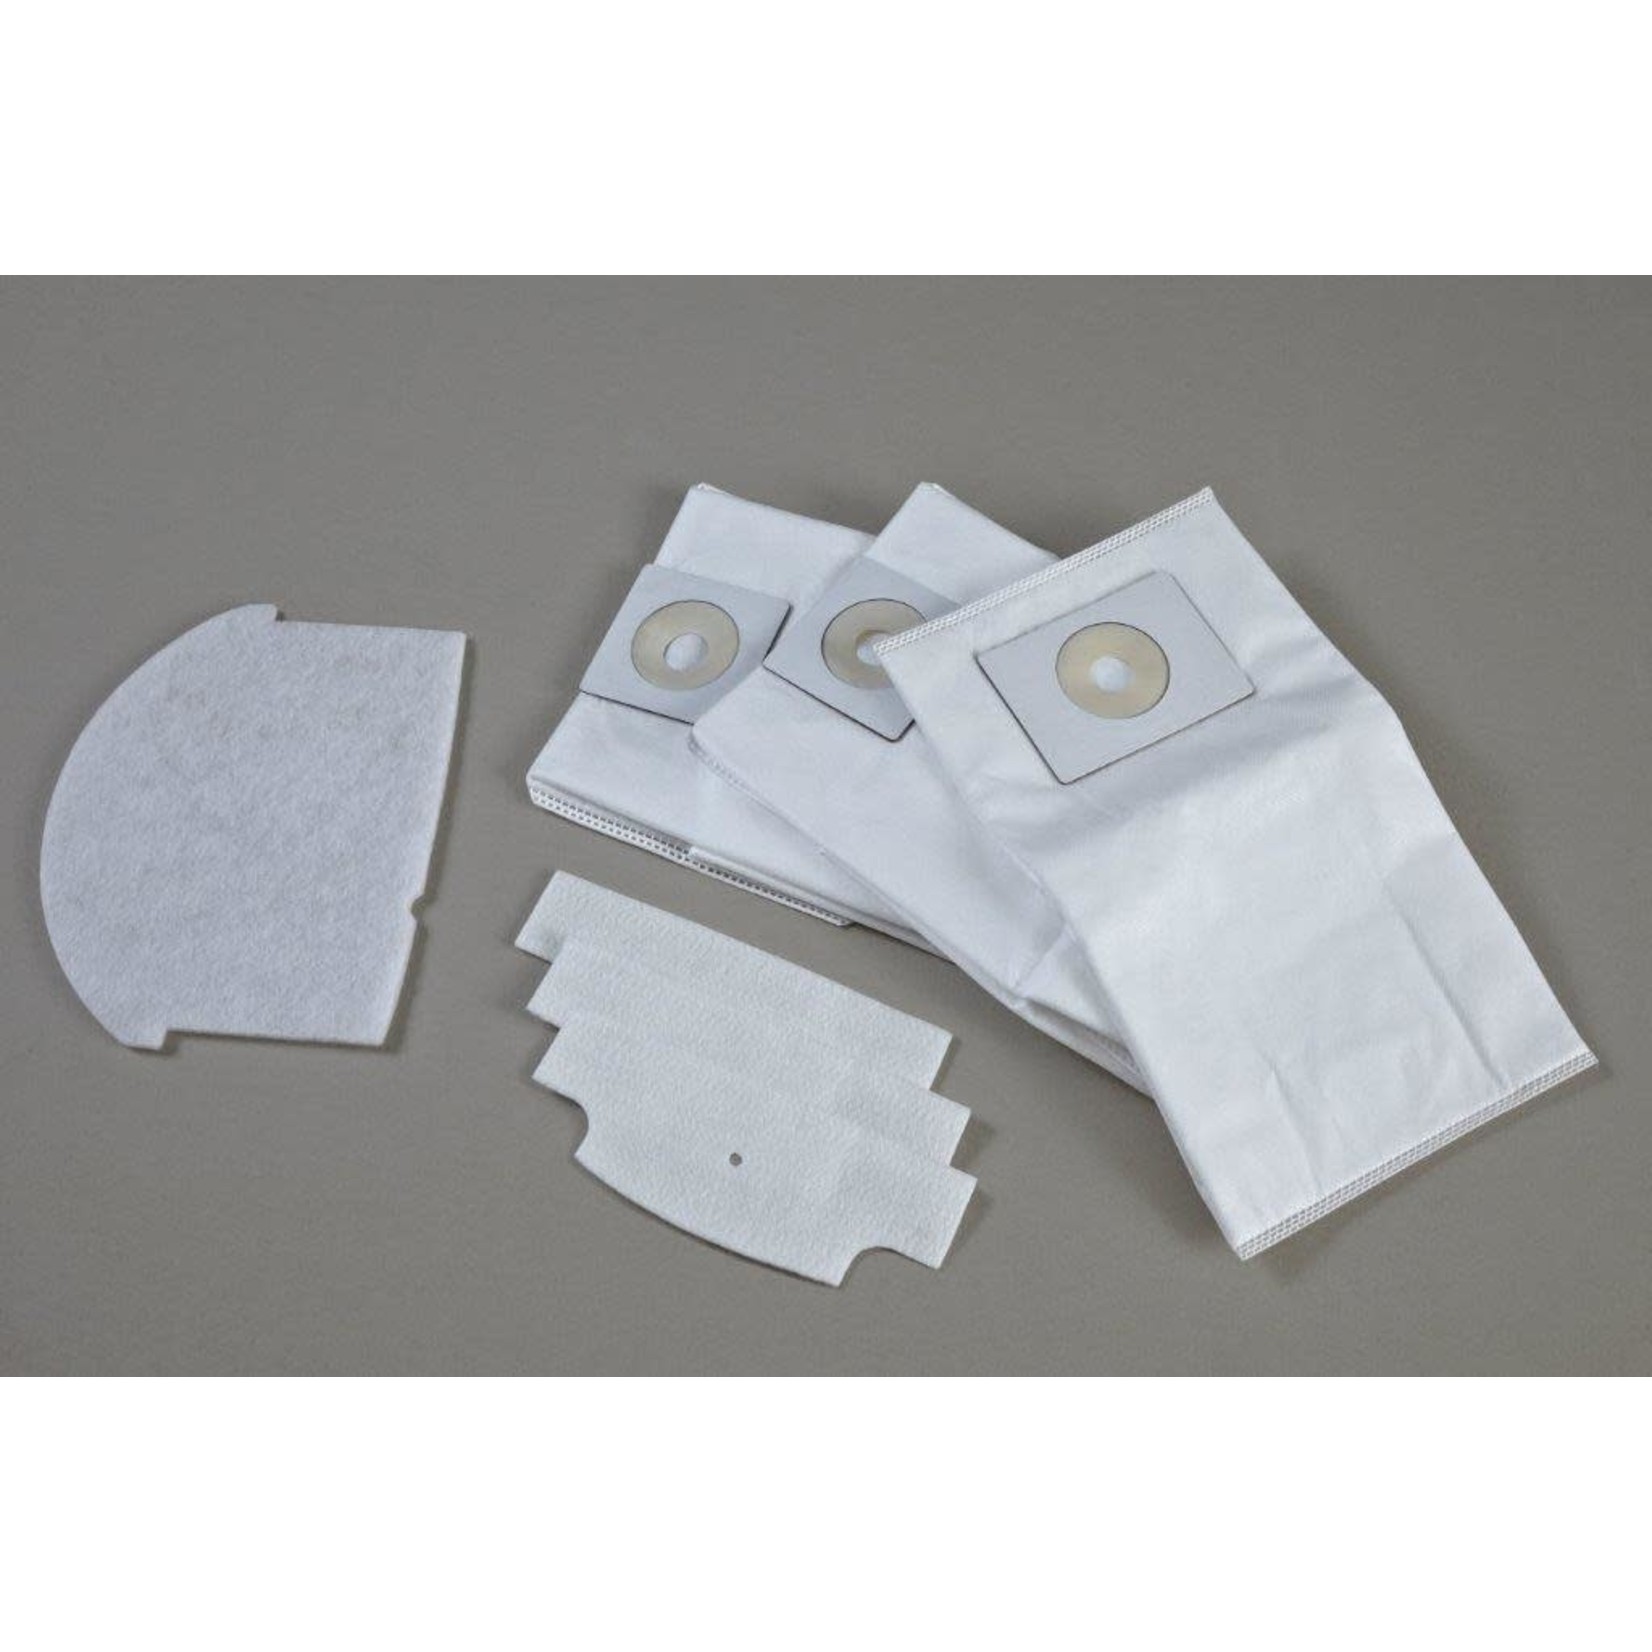 Intervac Intervac CondoVac Paper Bags -  3/pkg